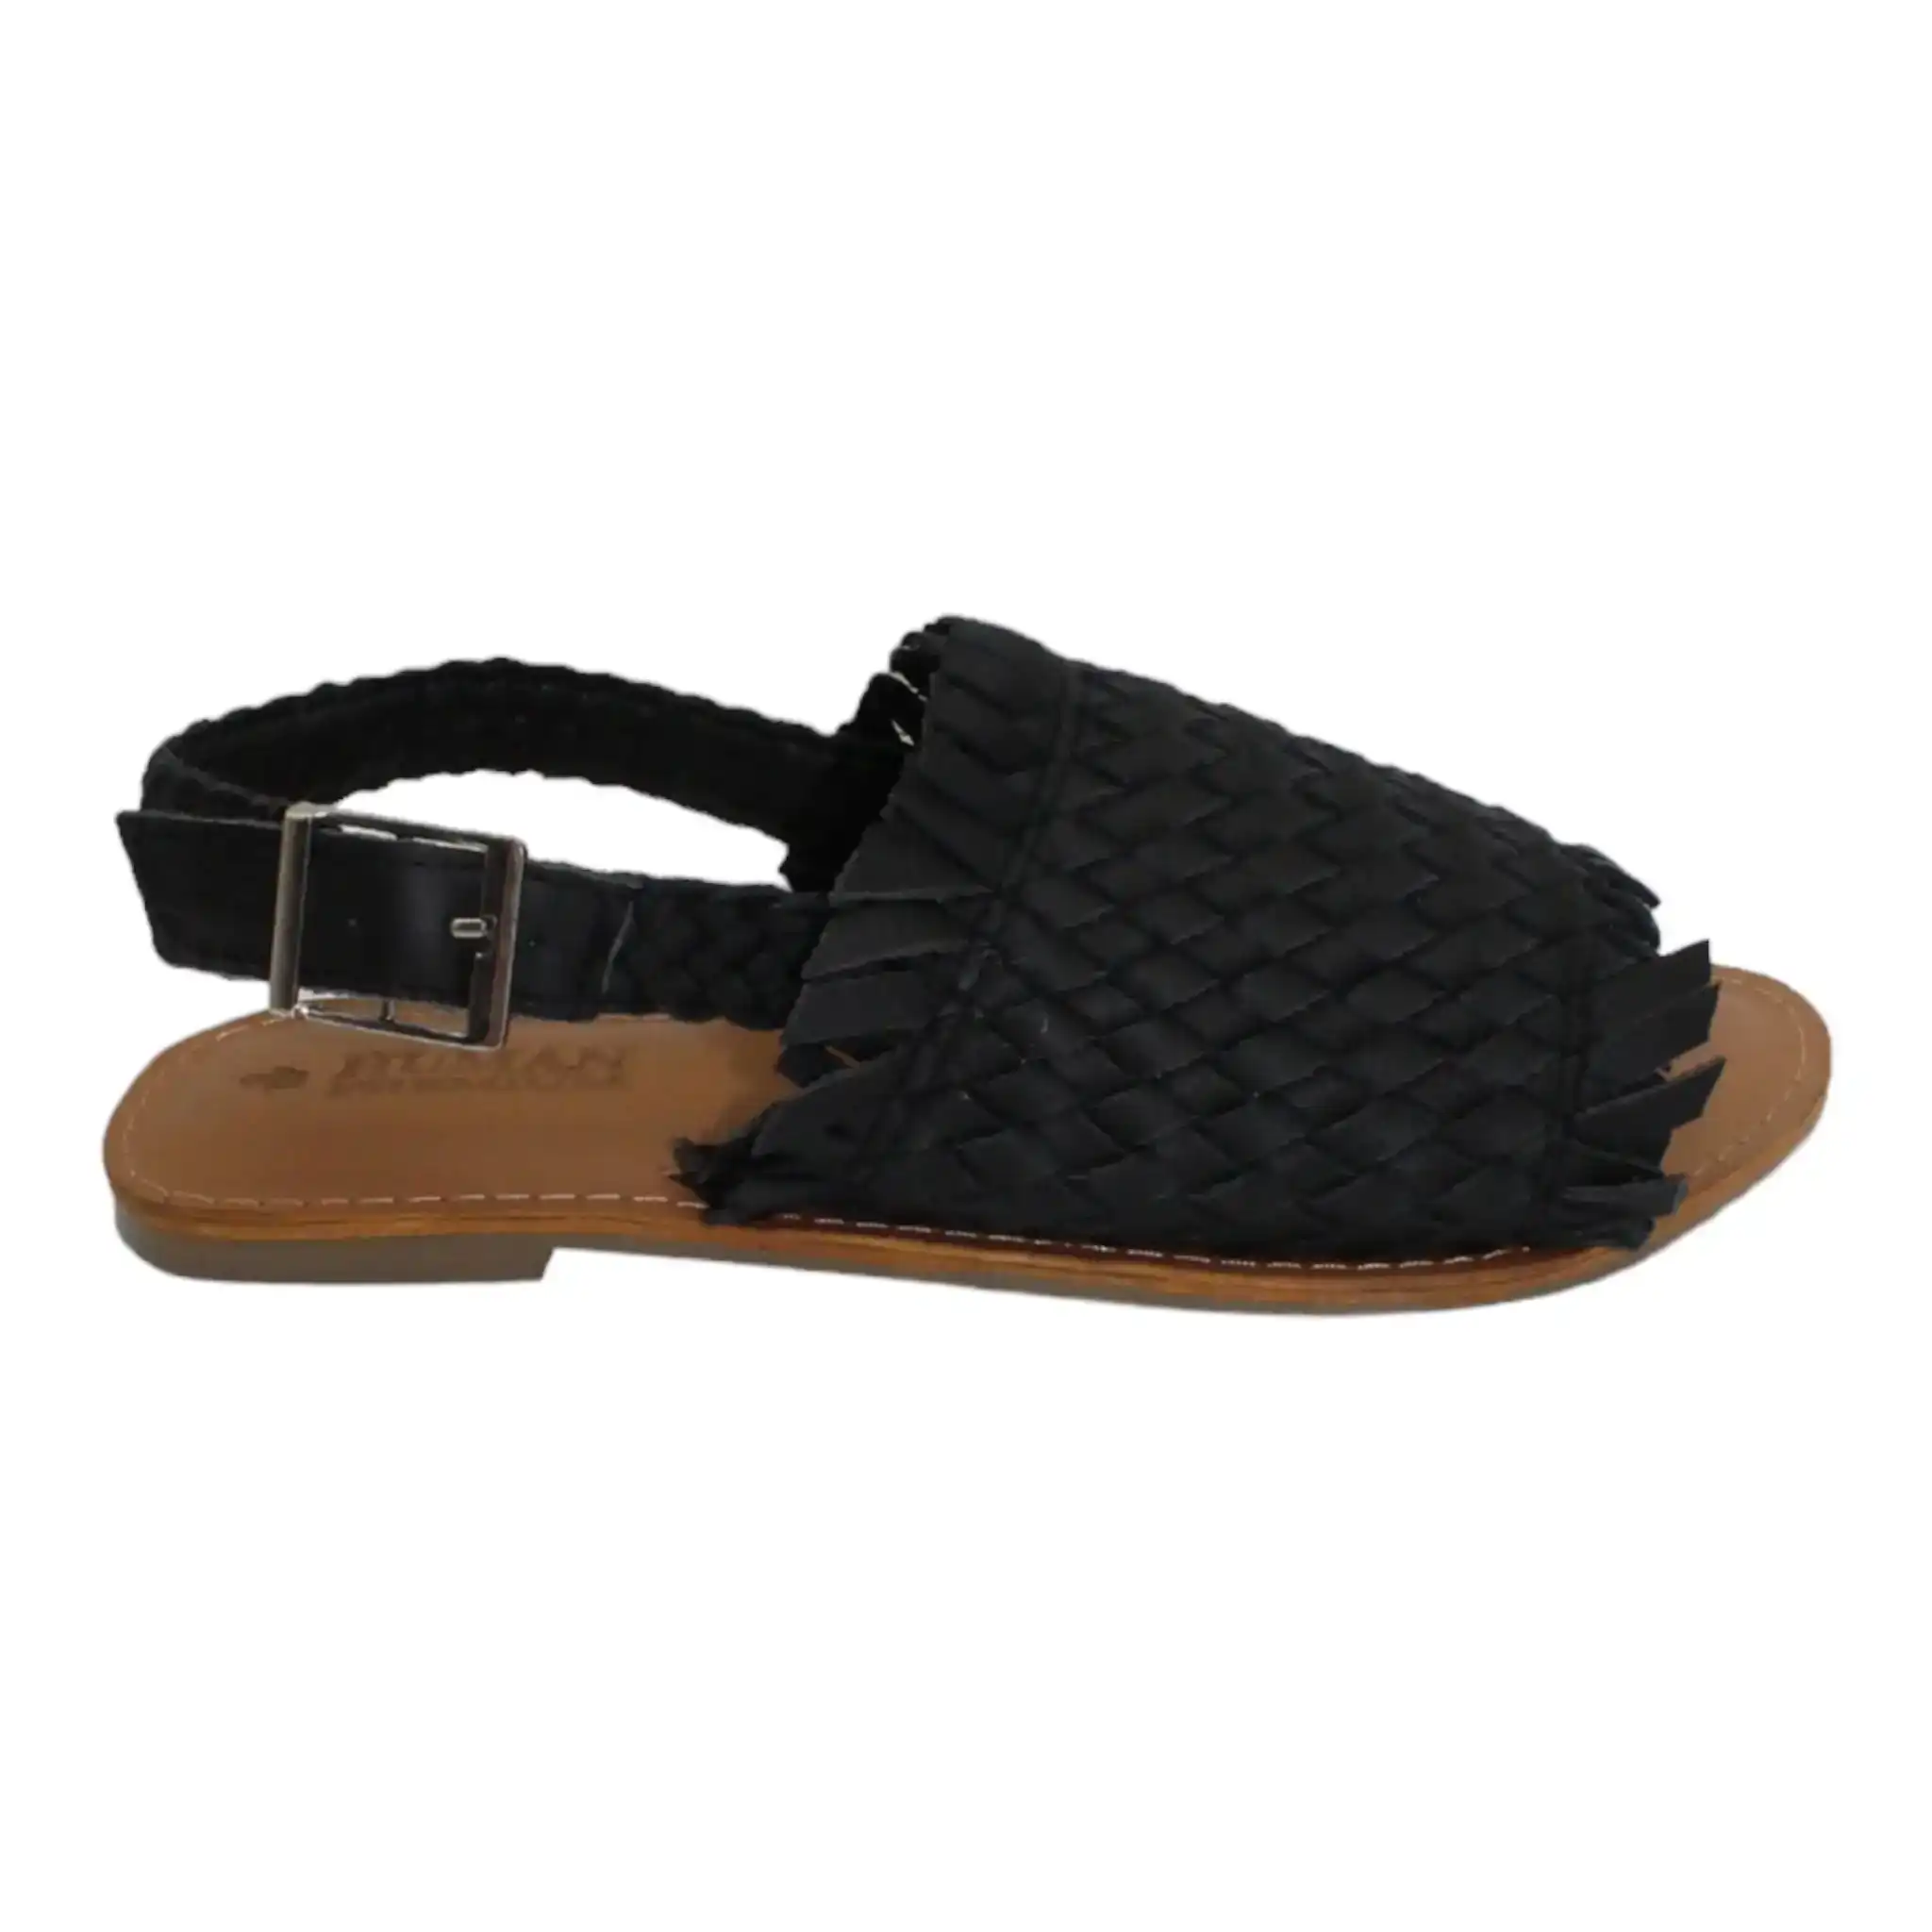 Evos Leather Sandal Black